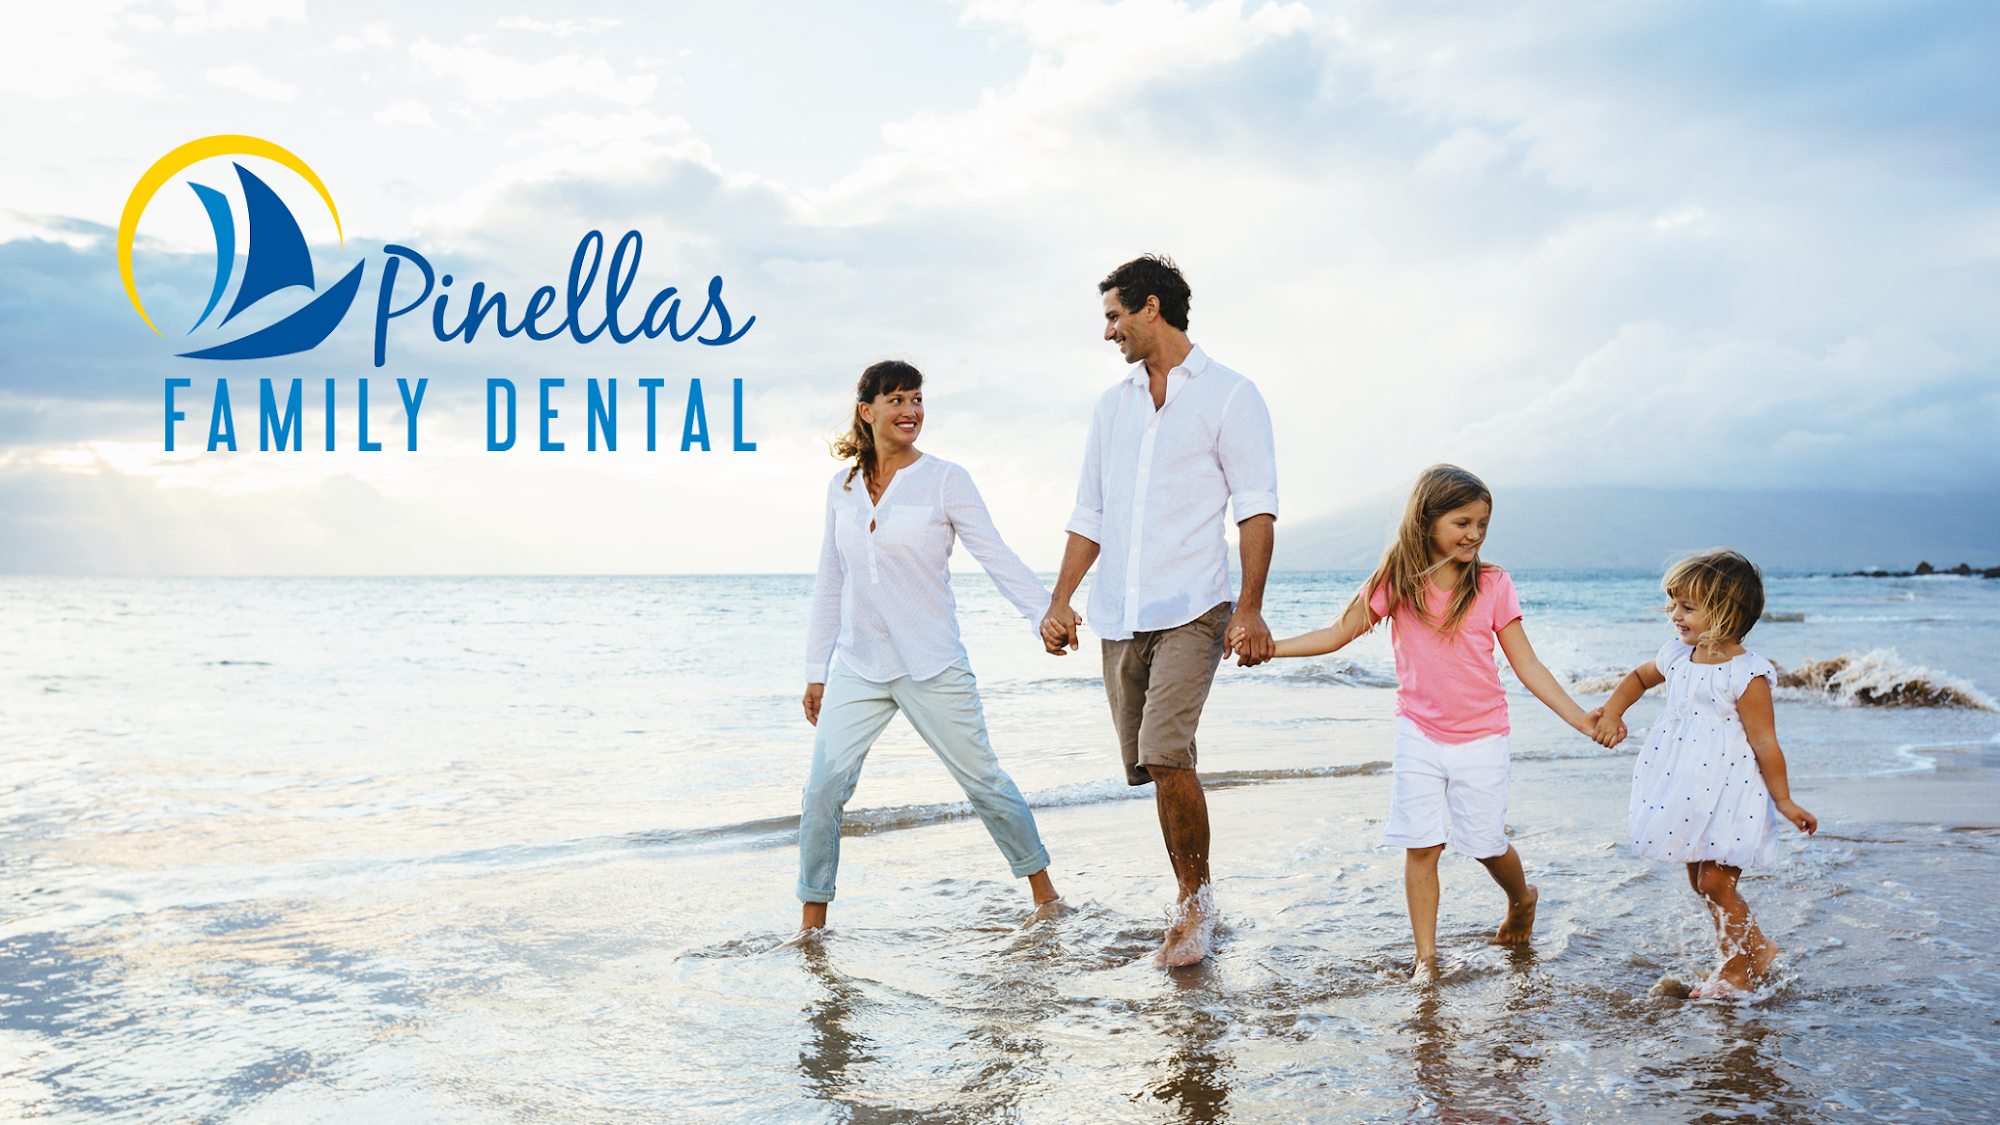 Pinellas Family Dental